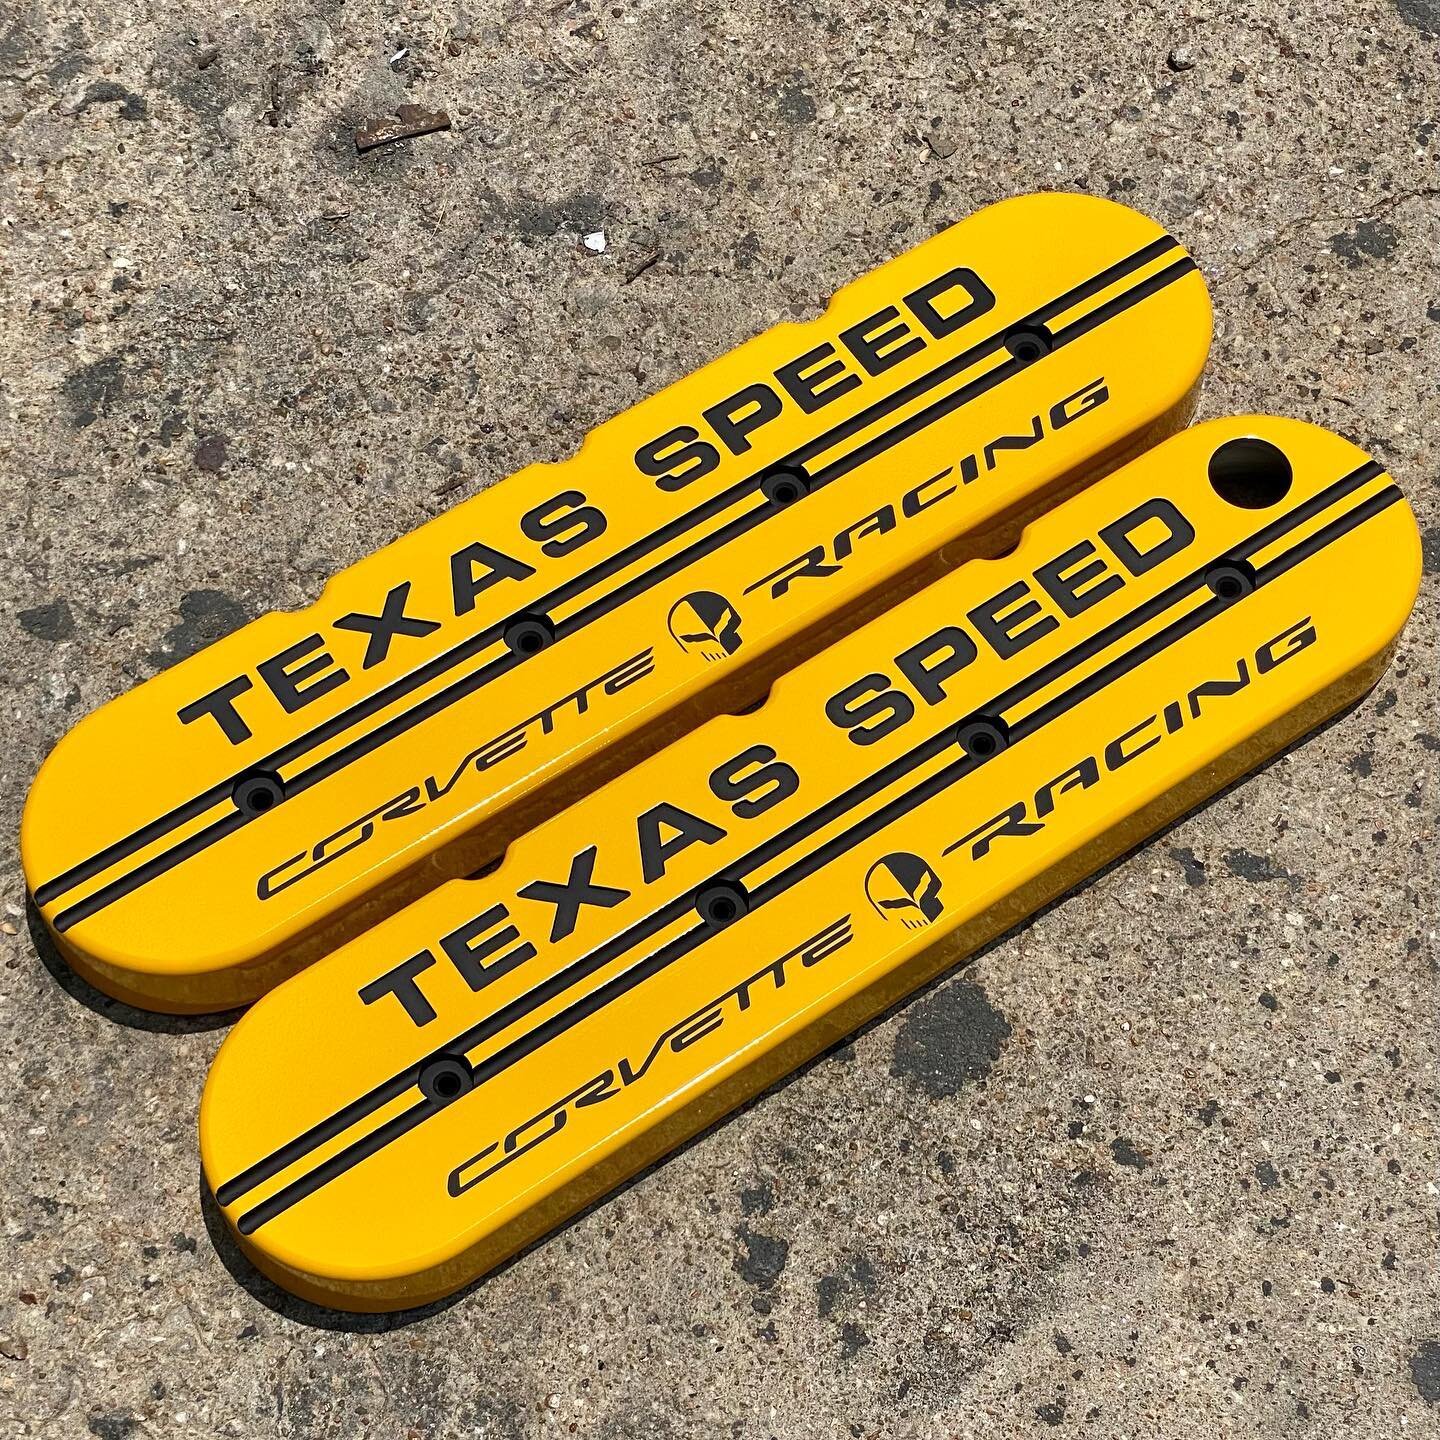 Another custom job on a set of @texasspeed valve covers! 🔥 🔥 
#enigma #enigmacoatings #powdercoating #powdercoat #texasspeed #black #yellow #corvette #corvetteracing #c5 #c6 #c7 #c8